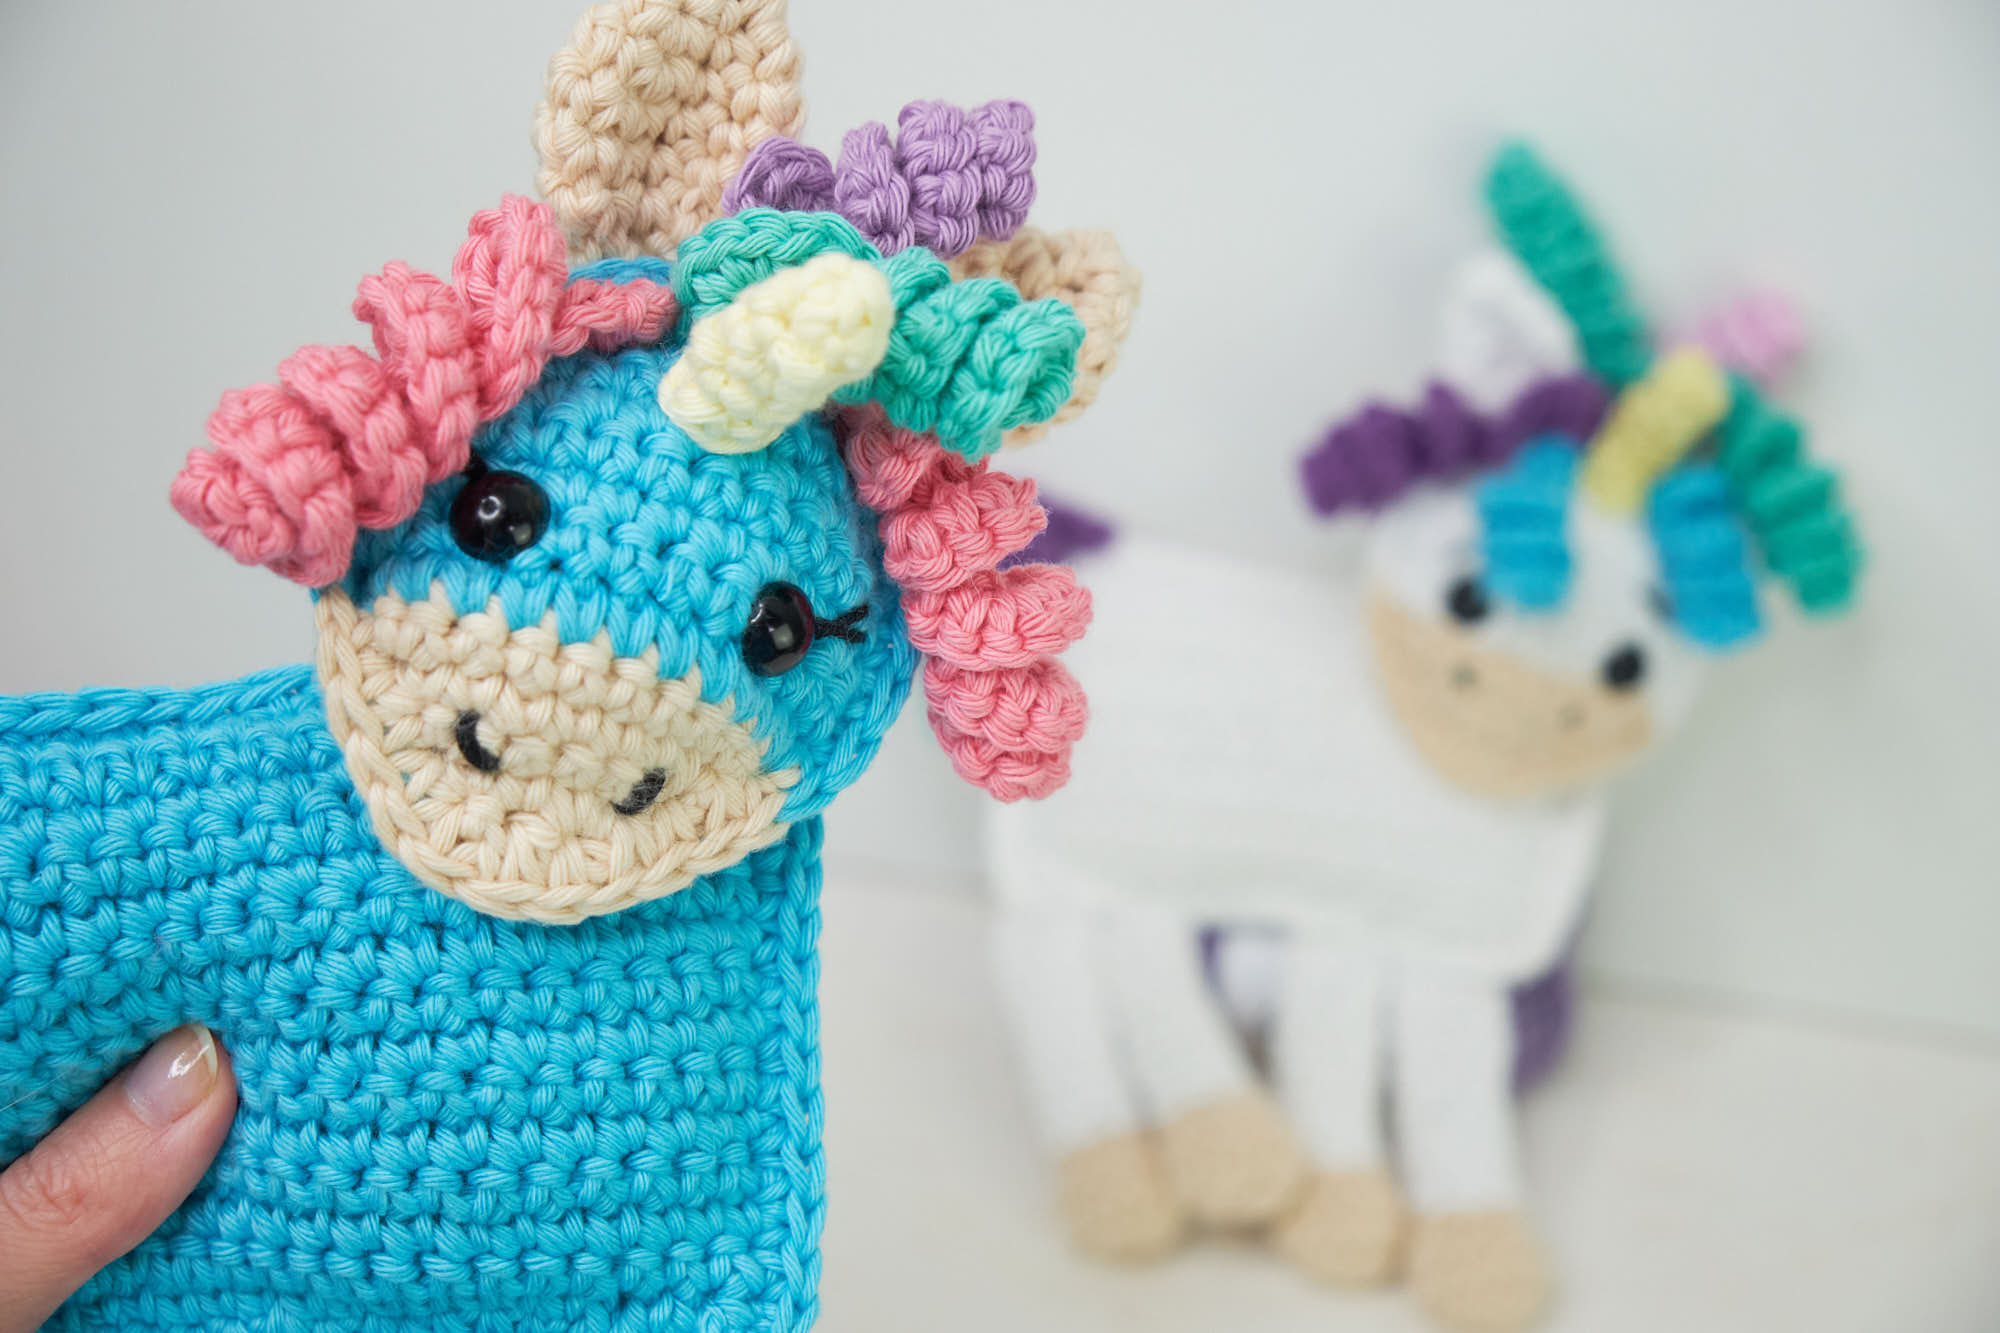 Pin by Celeste on accesorios | Crochet unicorn, Bag pattern, Crochet baby